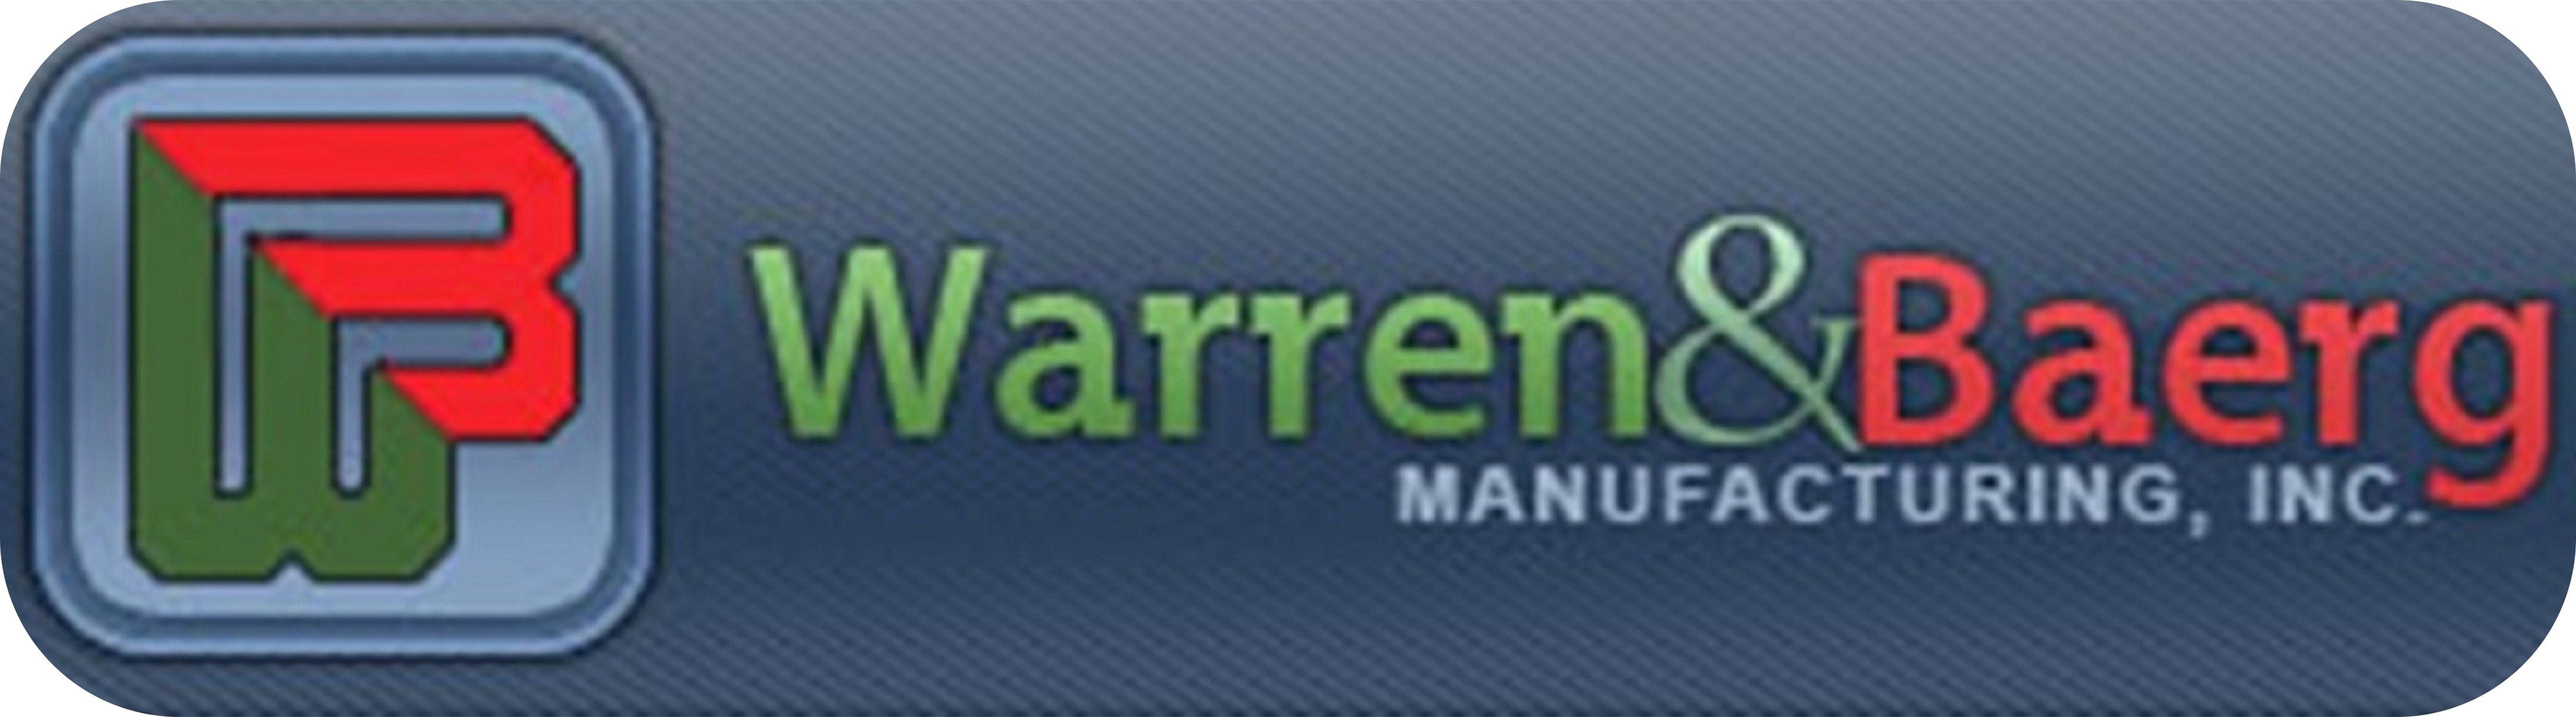 Warren & Baerg Manufacturing, Inc.